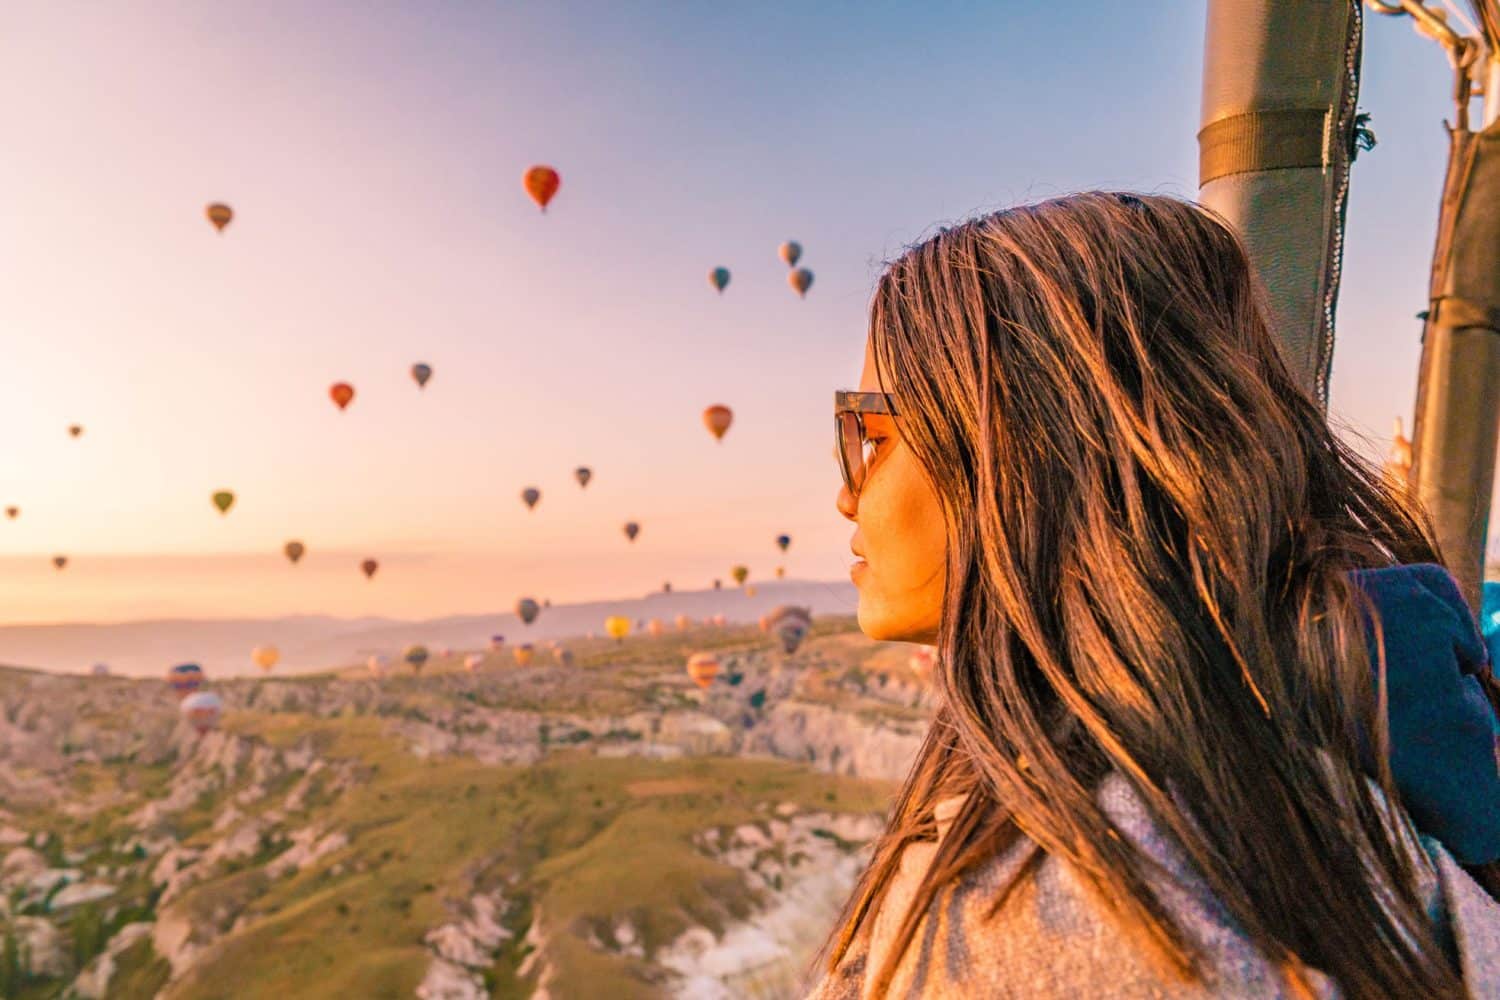 Cappadocia Balloon ride: Lady watching the balloons